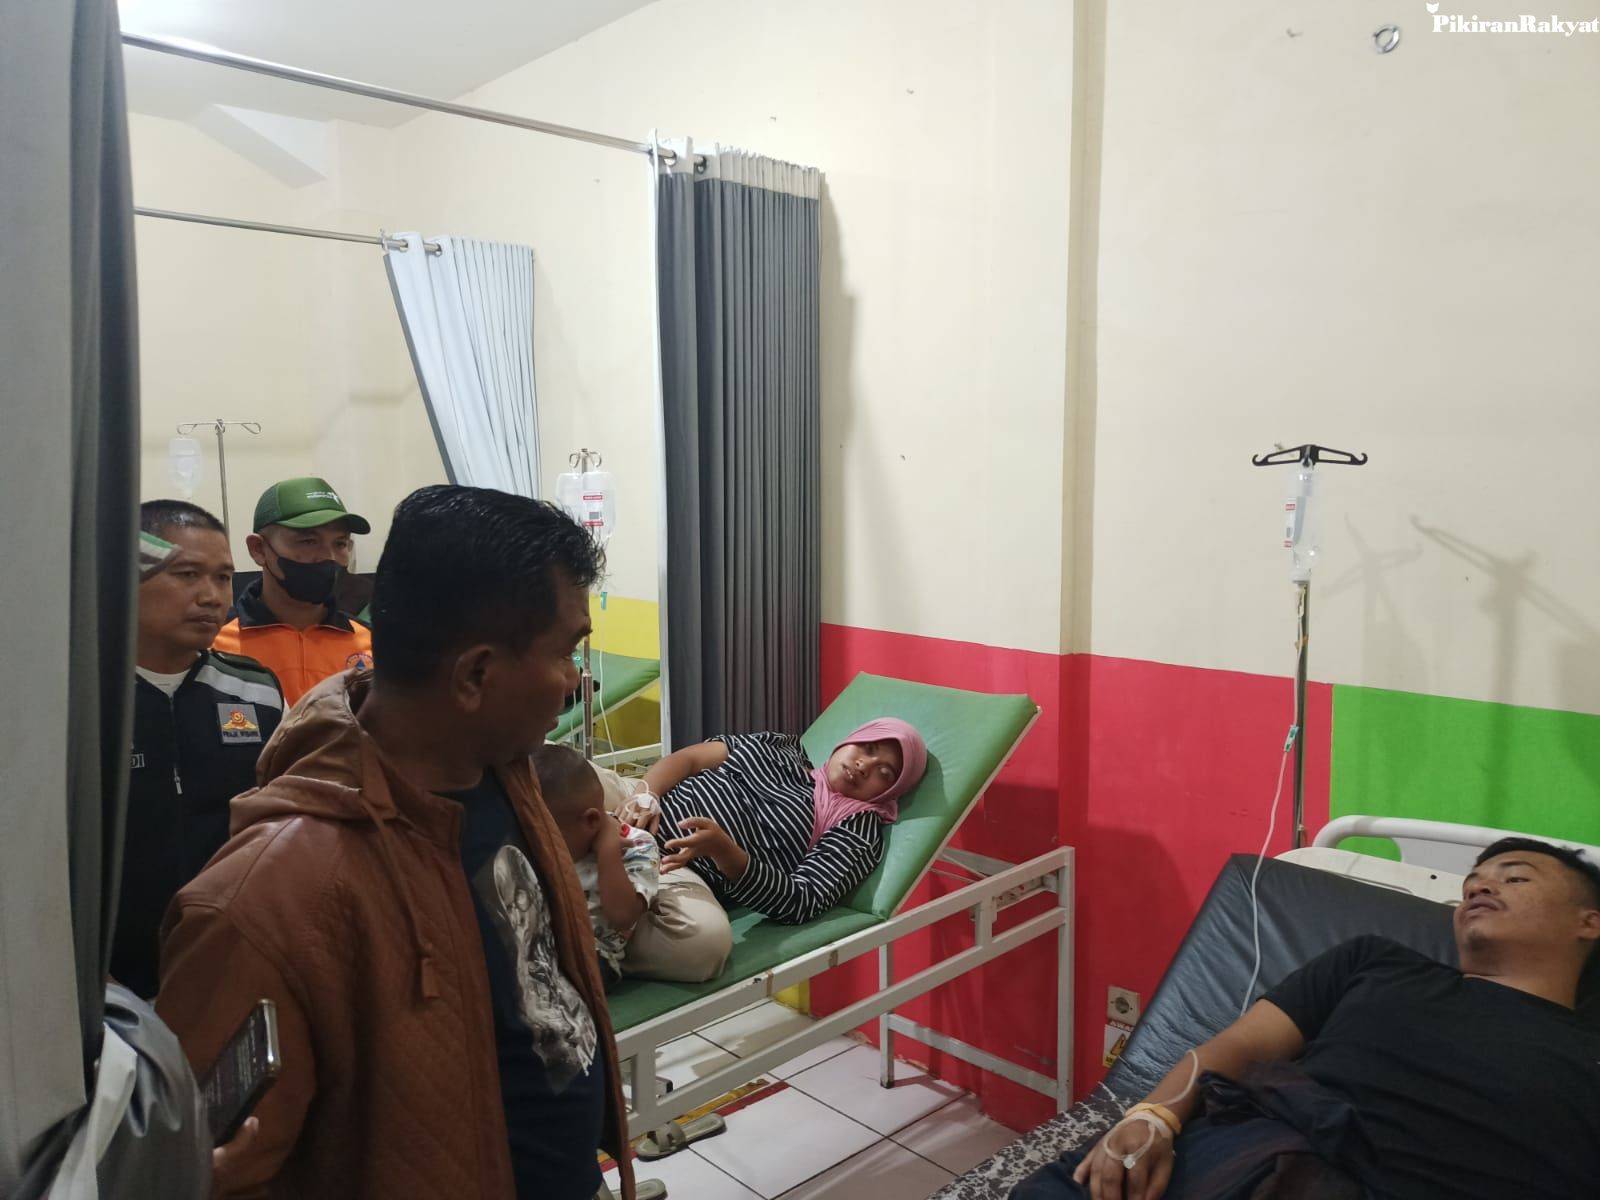 WARGA Desa Pangradin, Kecamatan Jasinga, Kabupaten Bogor menerima perawatan medis di Puskesmas Jasinga karena mengalami gejala keracunan makanan, Senin 13 Maret malam.